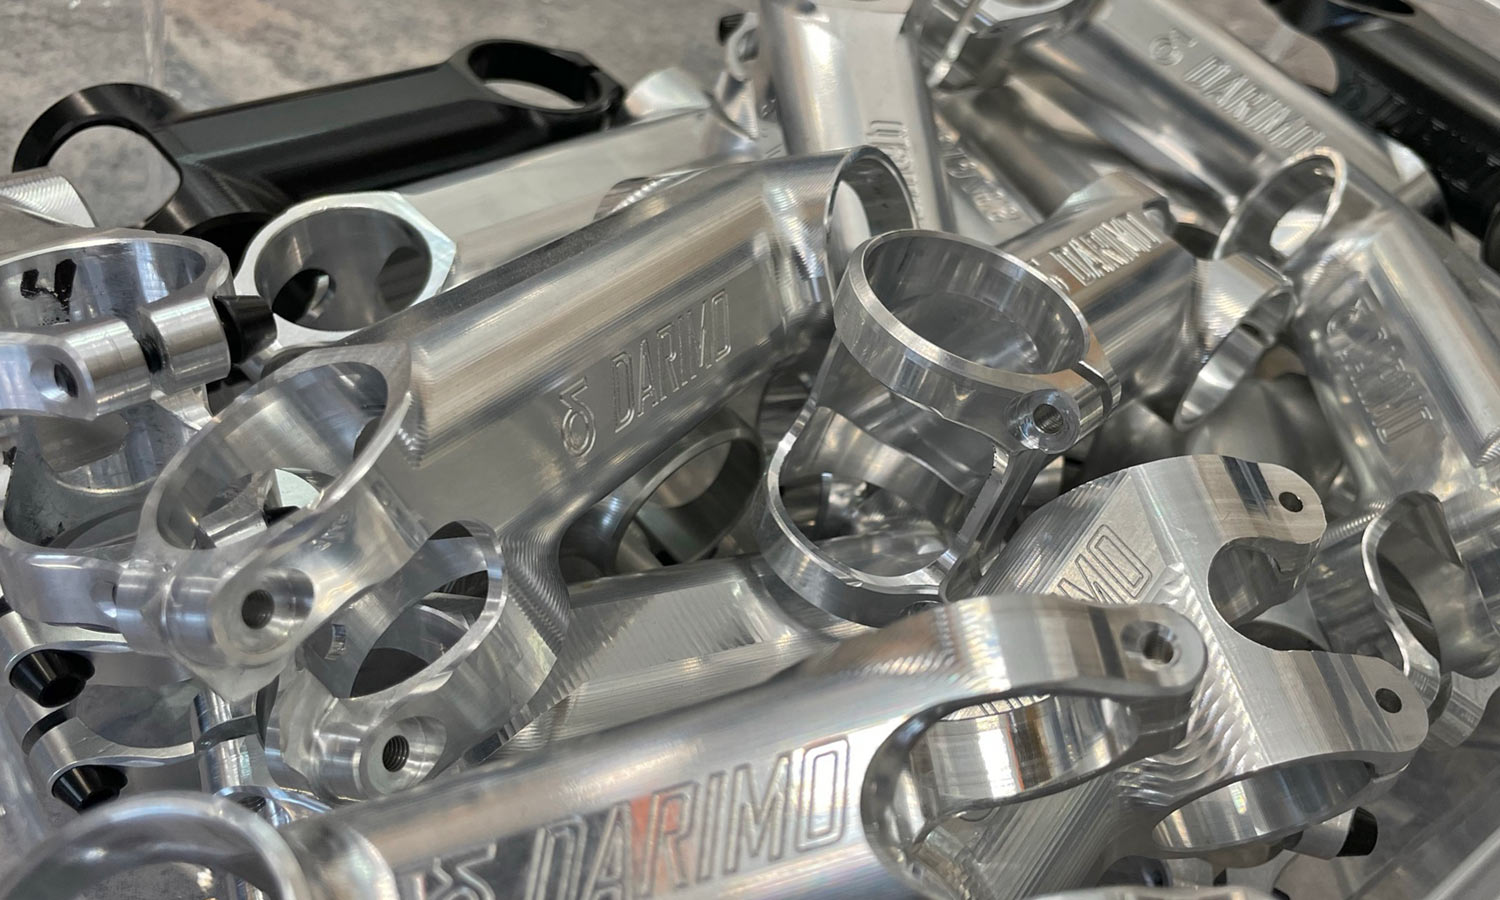 Darimo IX2AL stem, ultralight custom aluminum alloy road mountain bike stem, in stock